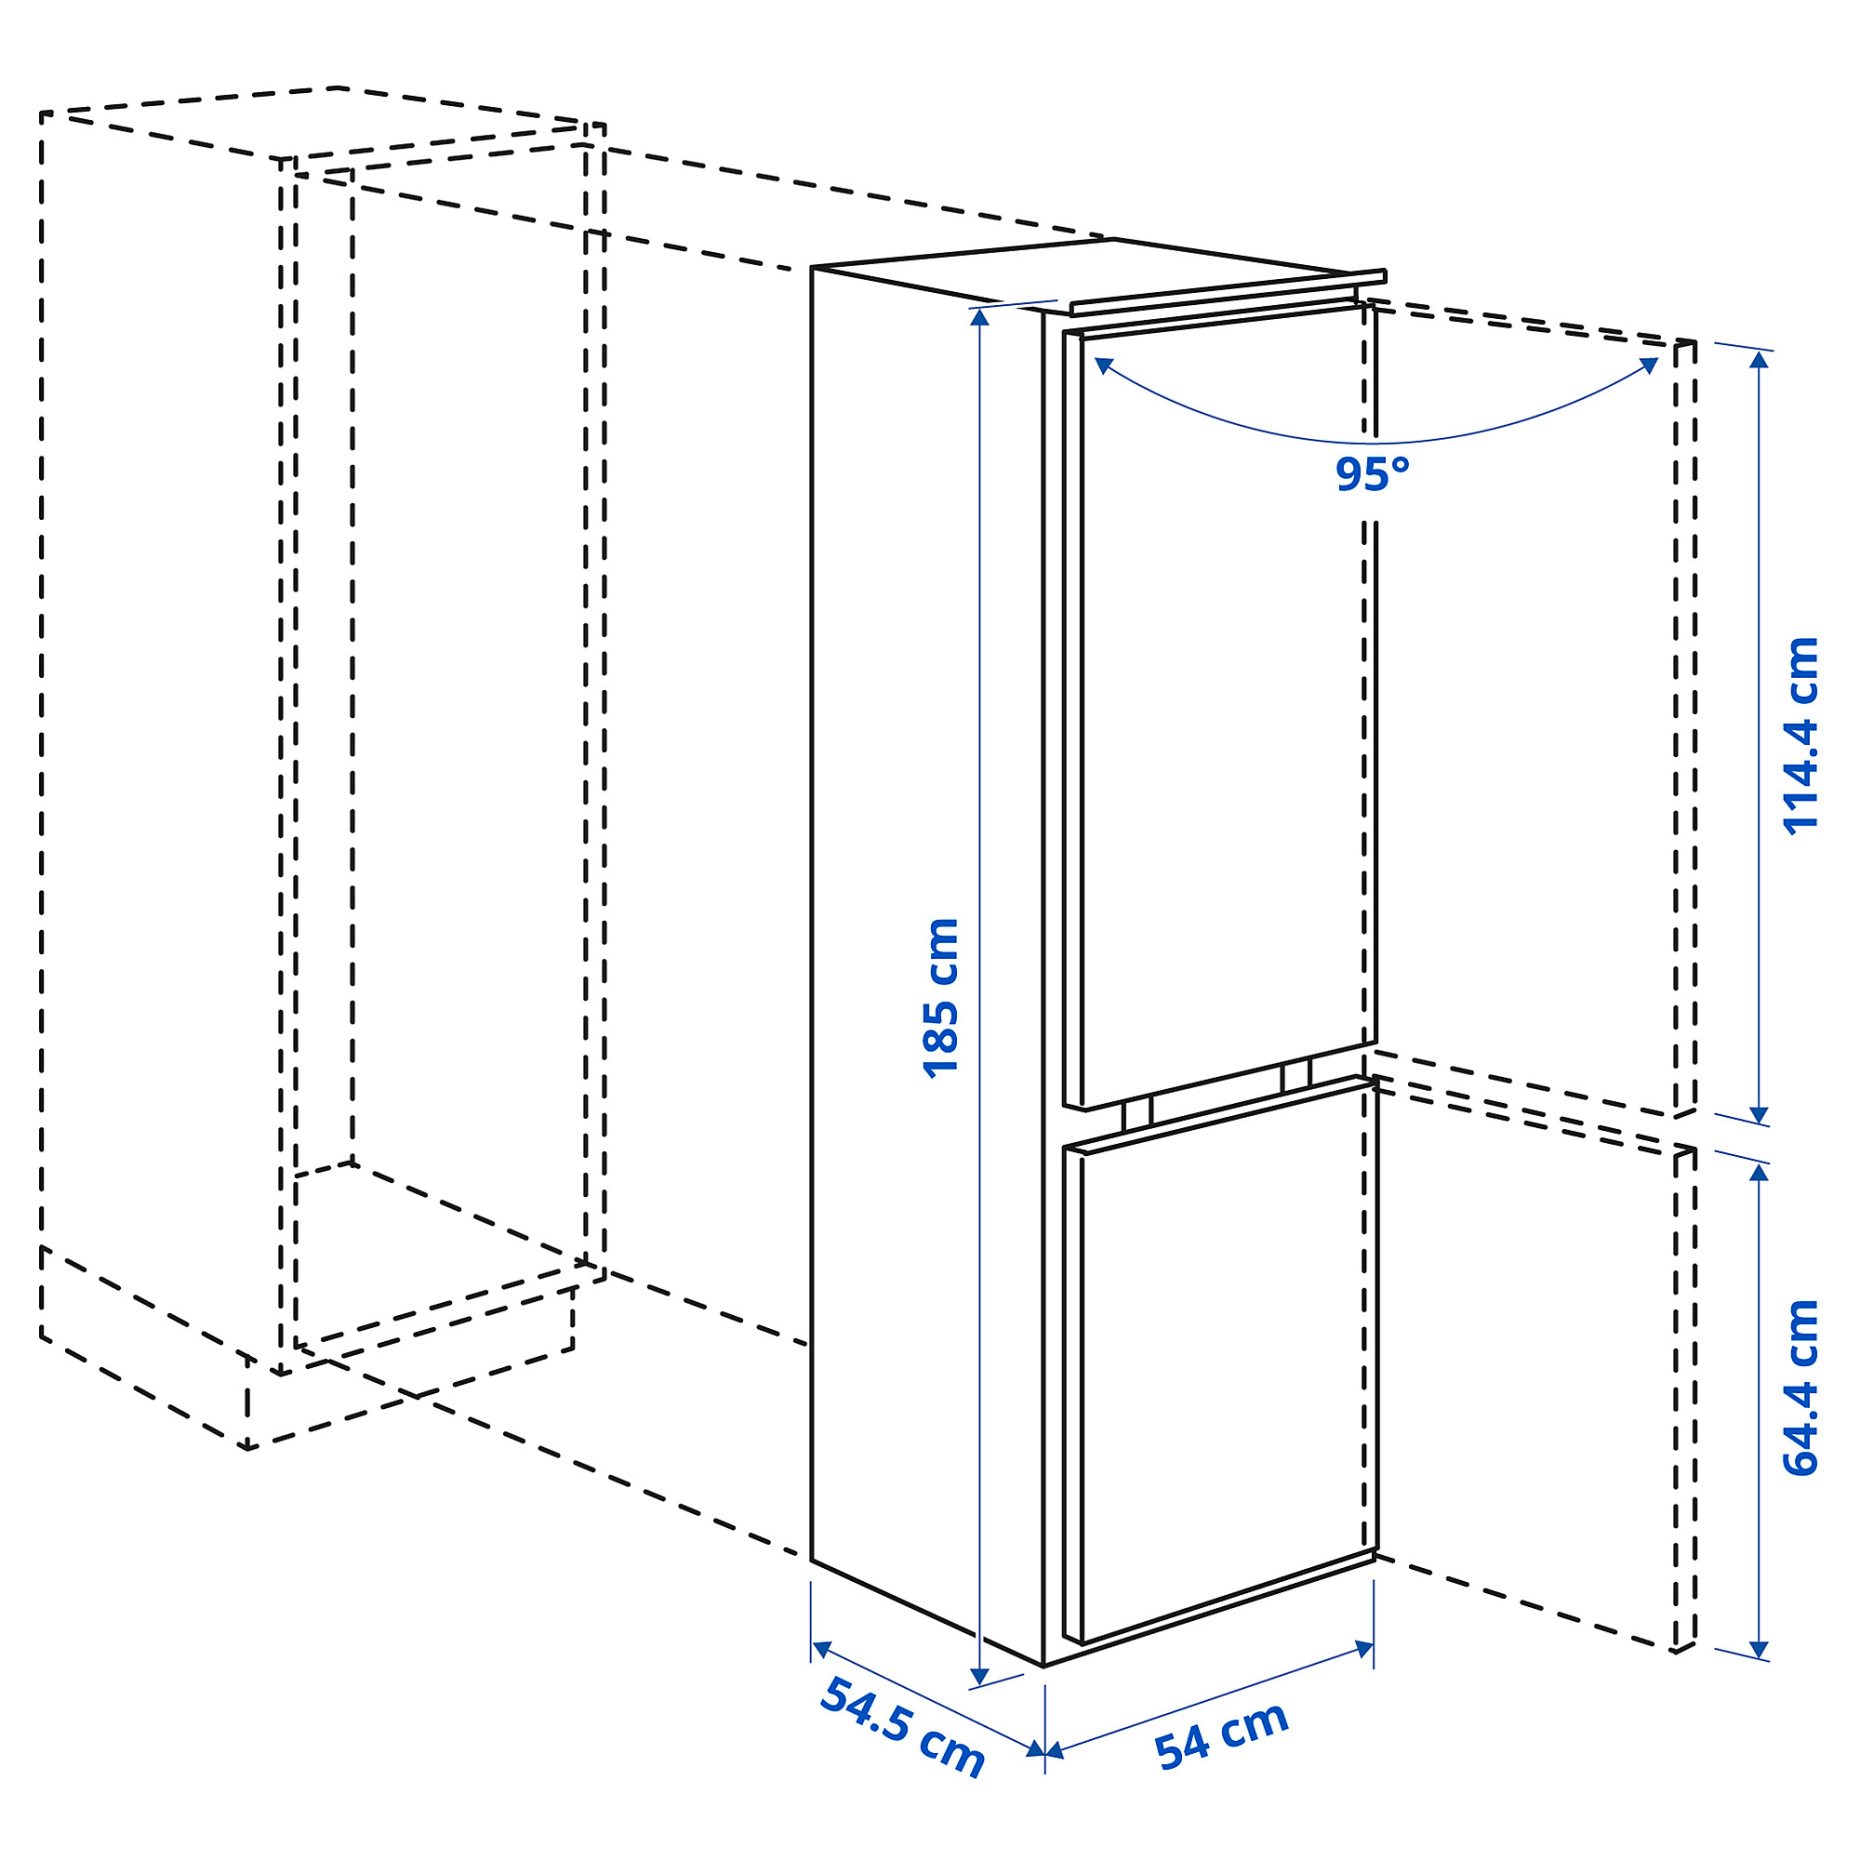 TINAD, хладилник/фризер, IKEA 500, вграден, 005.728.72